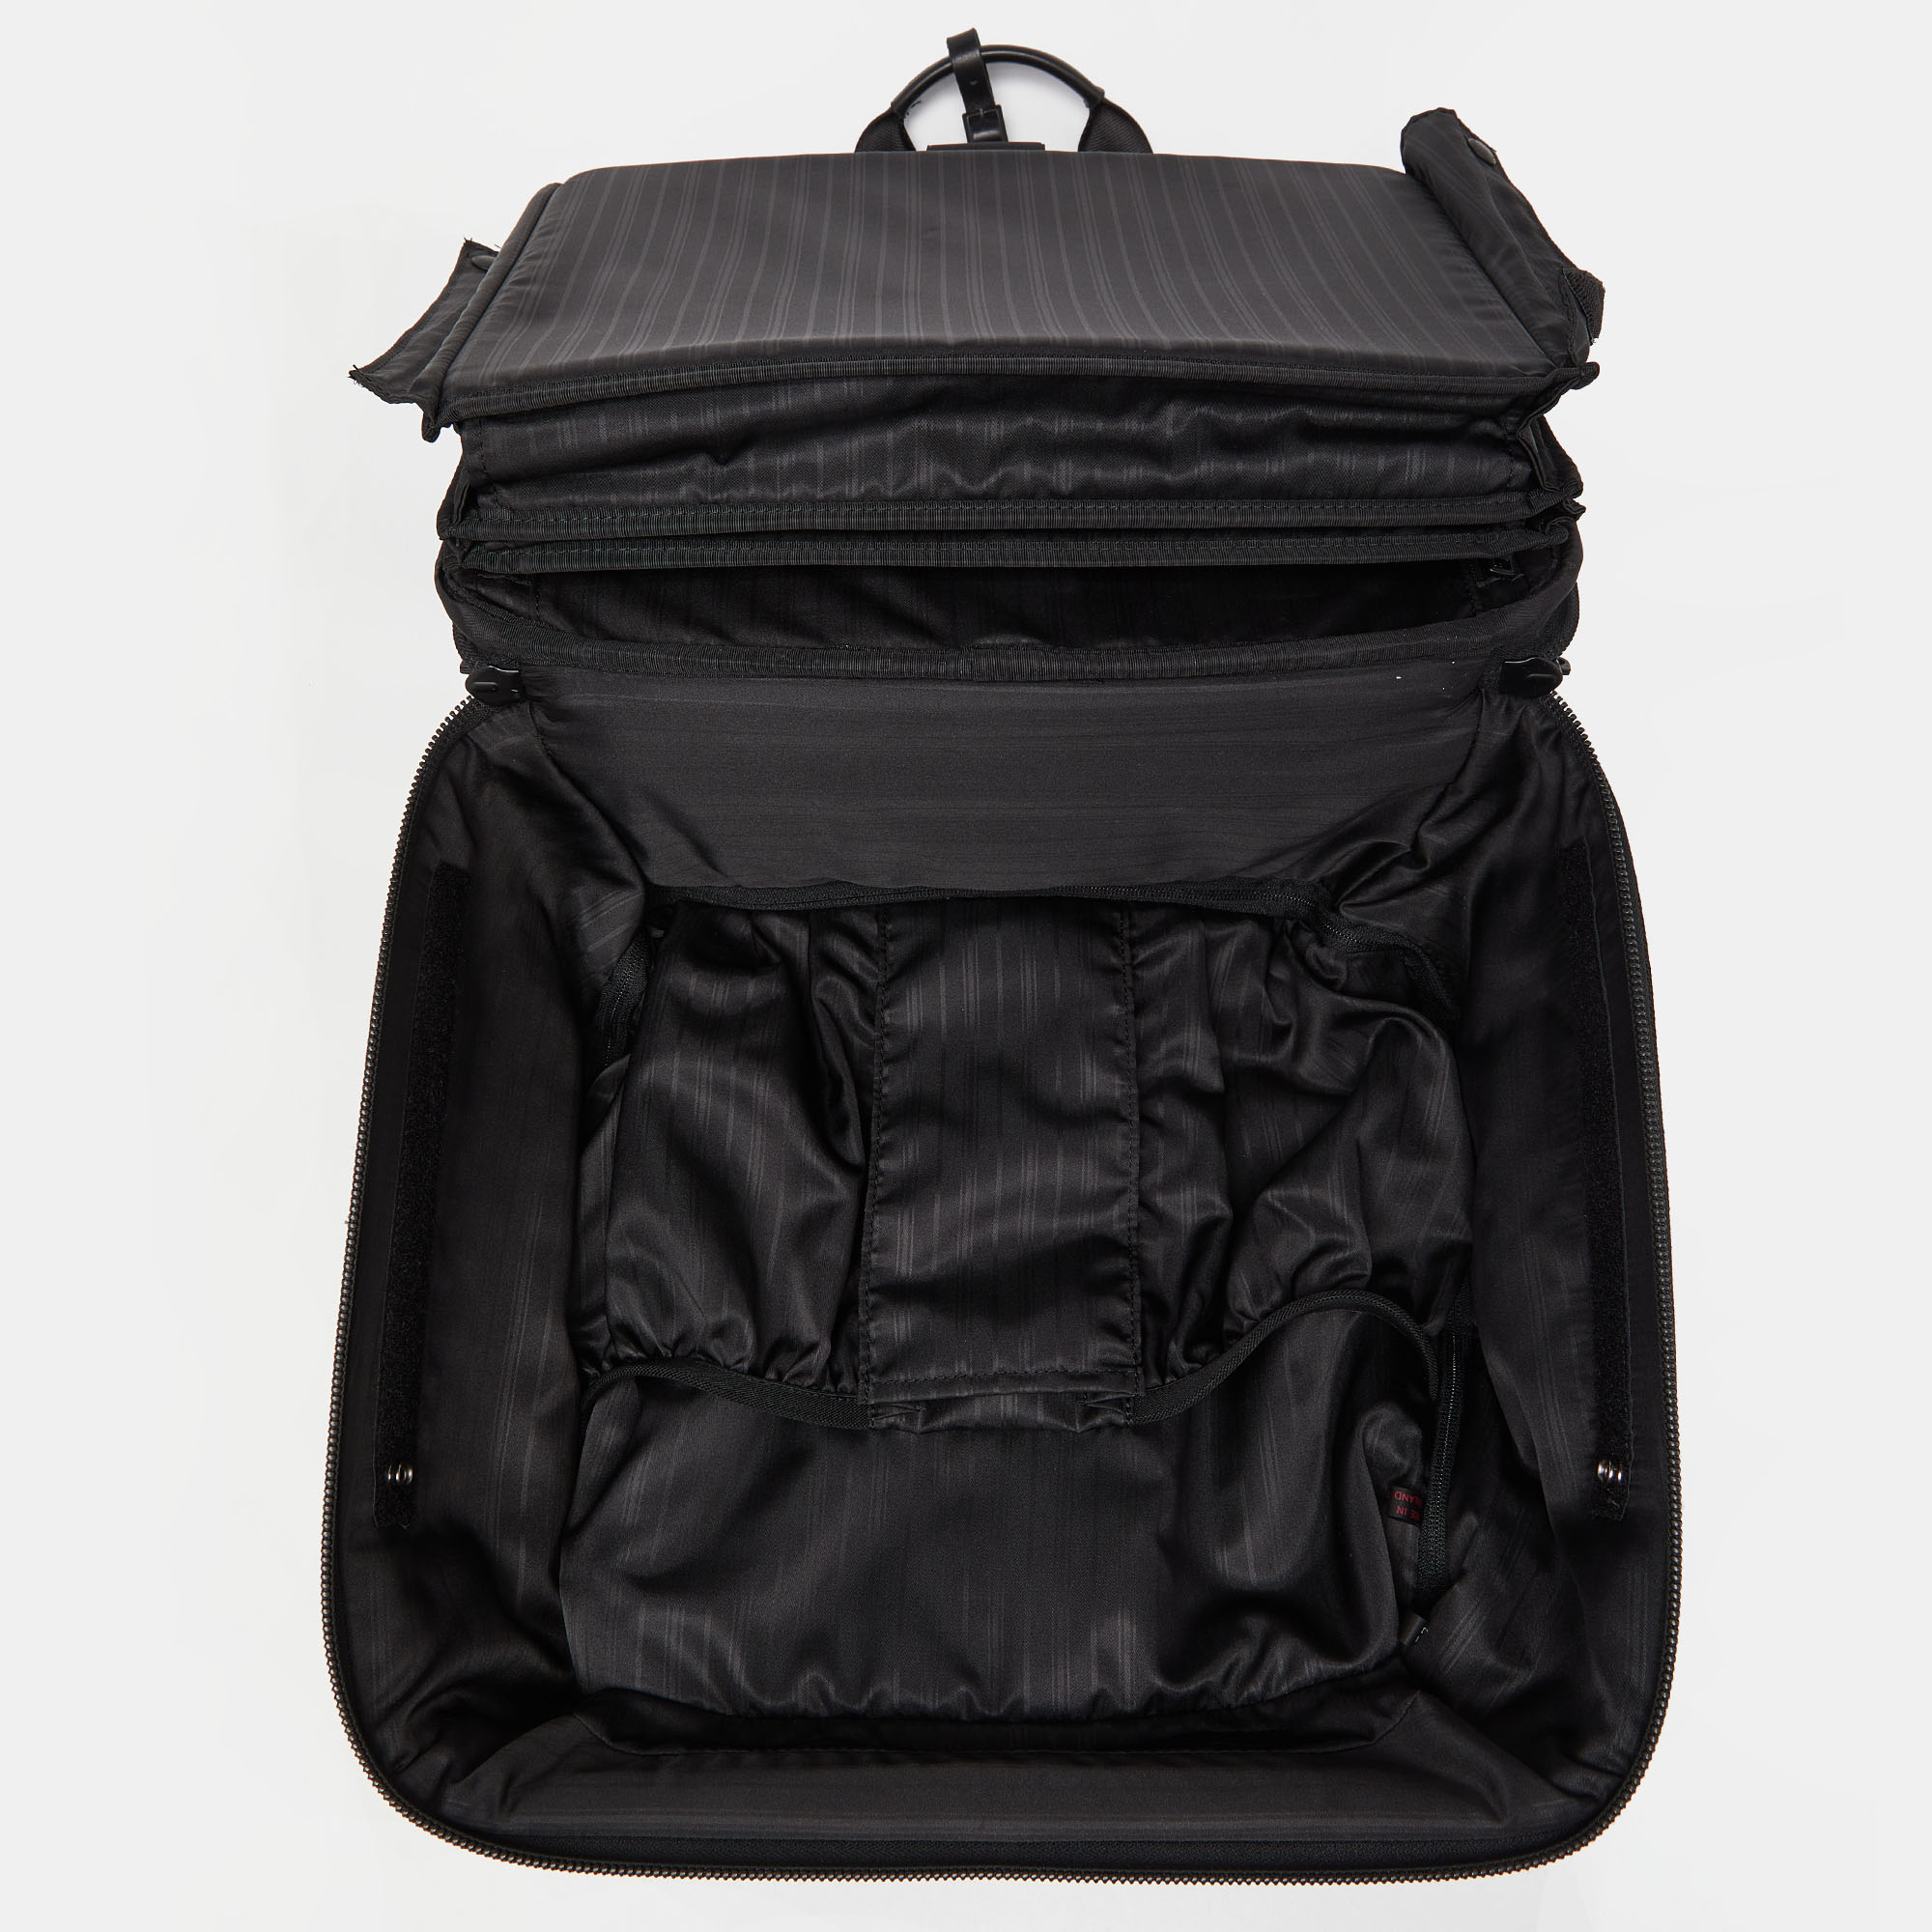 -TUMI Black Nylon And Leather Alpha Lightweight 2 Wheeled Laptop Briefcase